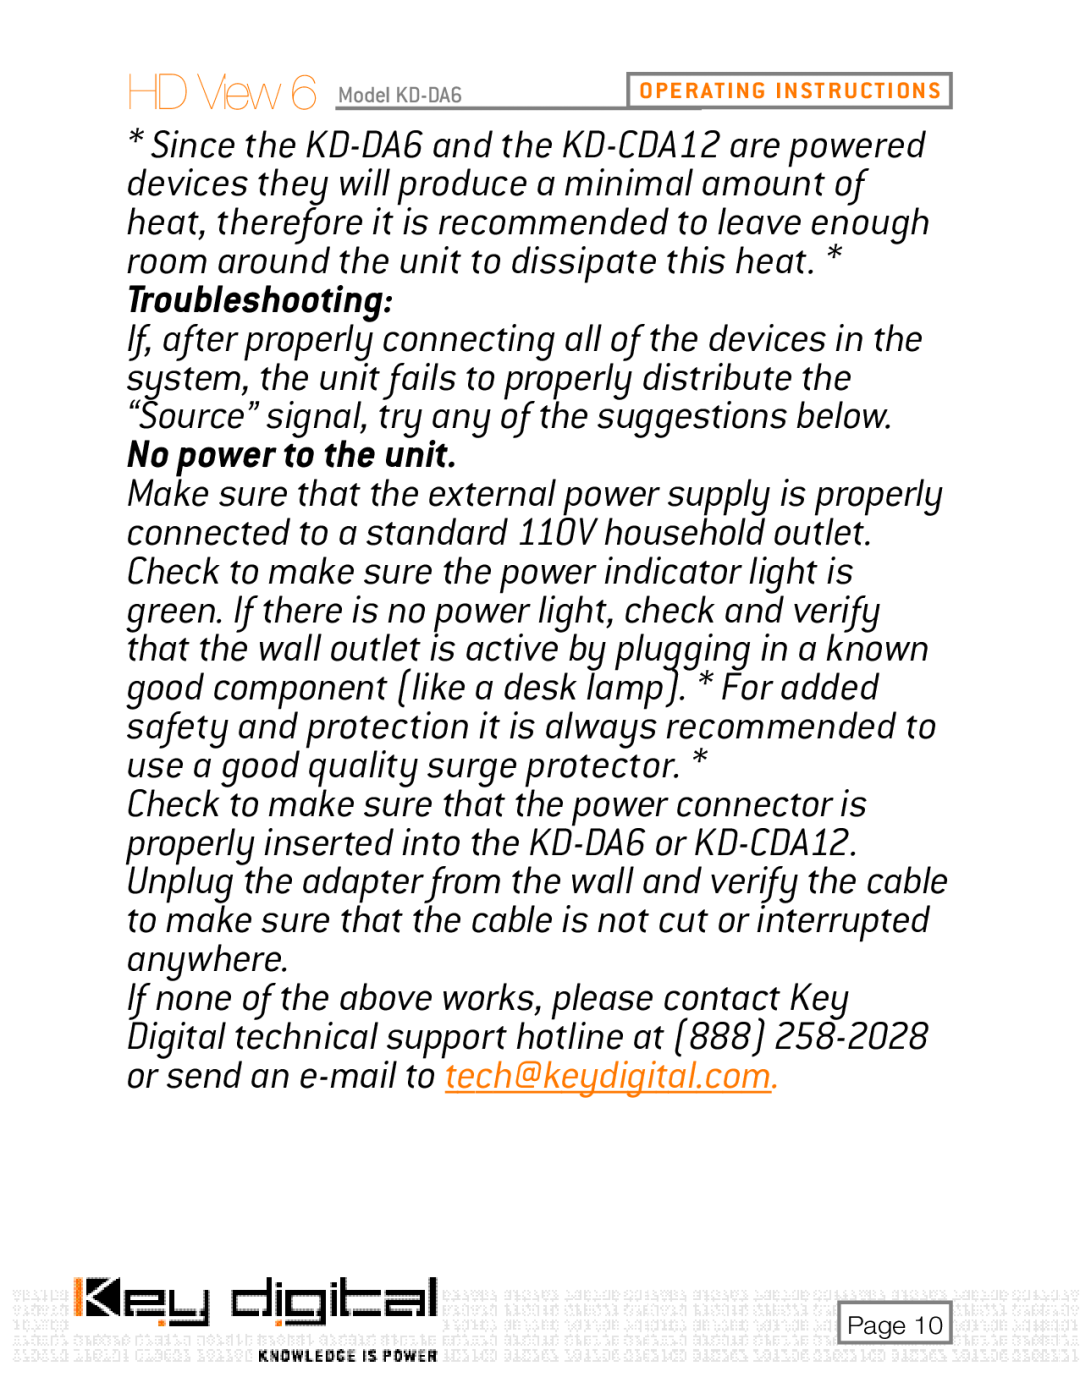 Key Digital KD-DA6, KD-CDA12 user manual Troubleshooting, No power to the unit 